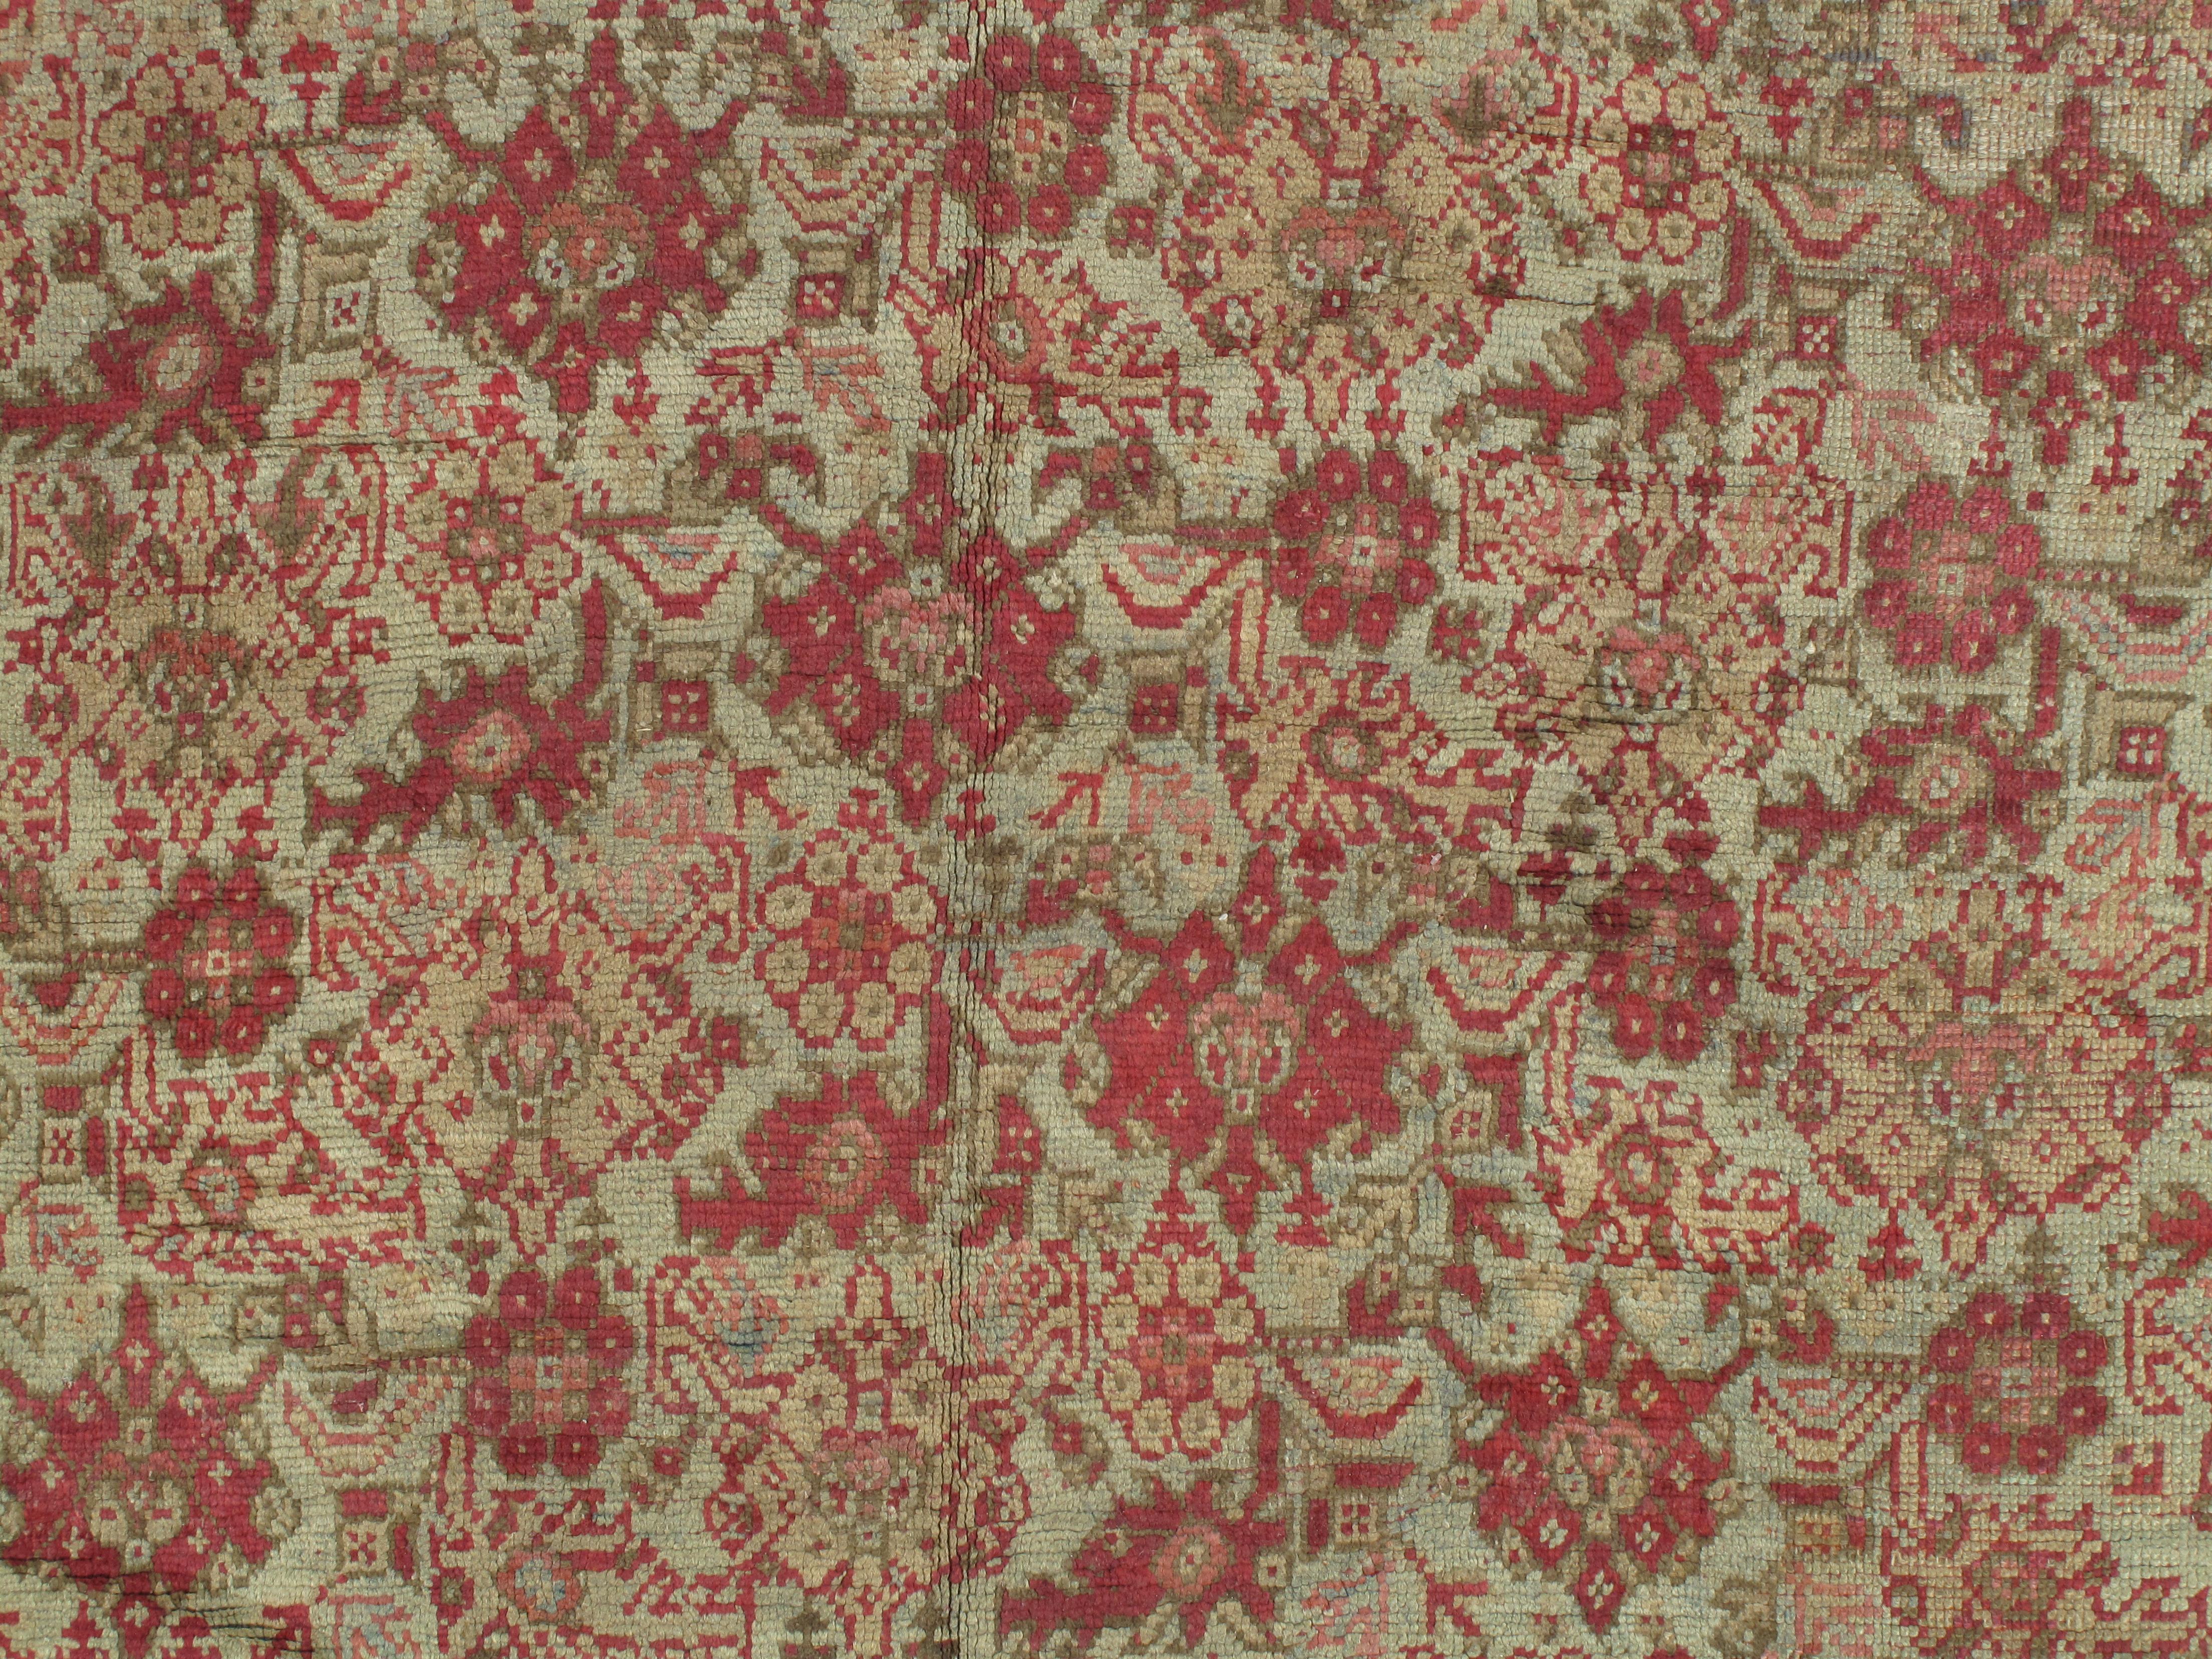 19th Century Antique Oushak Carpet, Handmade Oriental Rug, Pale Light Blue, Coral, Raspberry For Sale